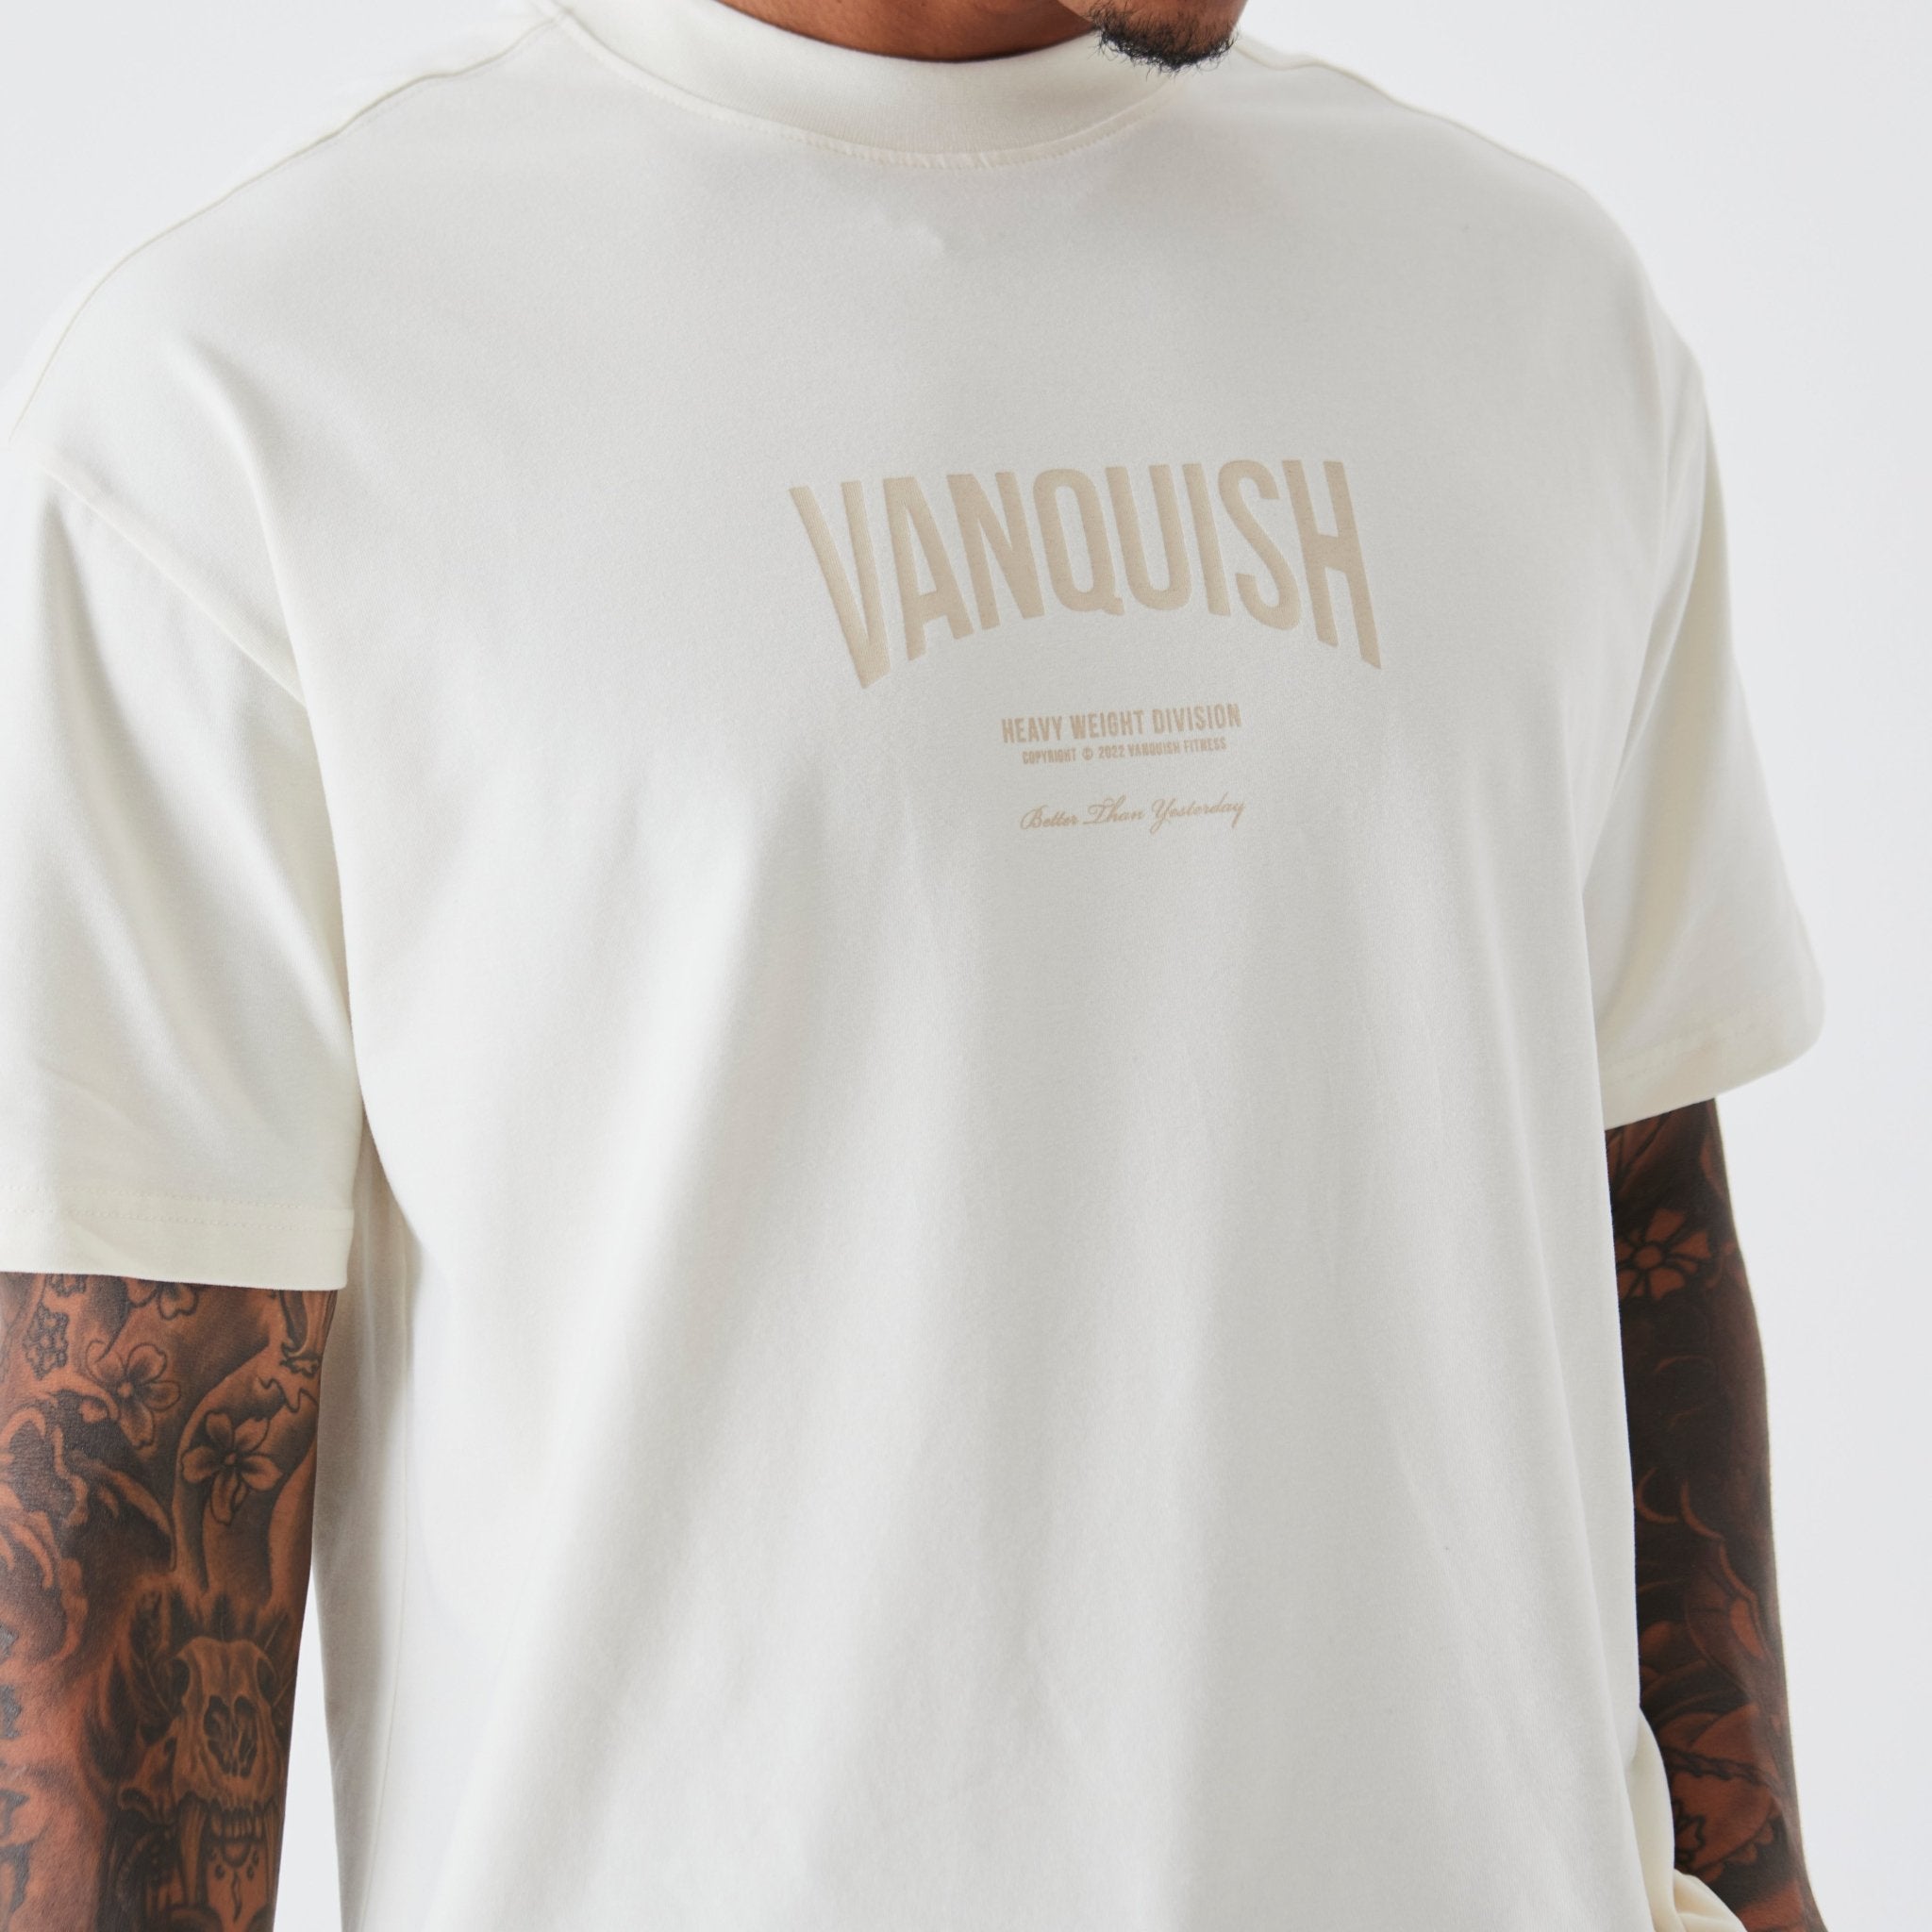 Vanquish Heavyweight Division Vintage White Oversized T Shirt - Vanquish Fitness